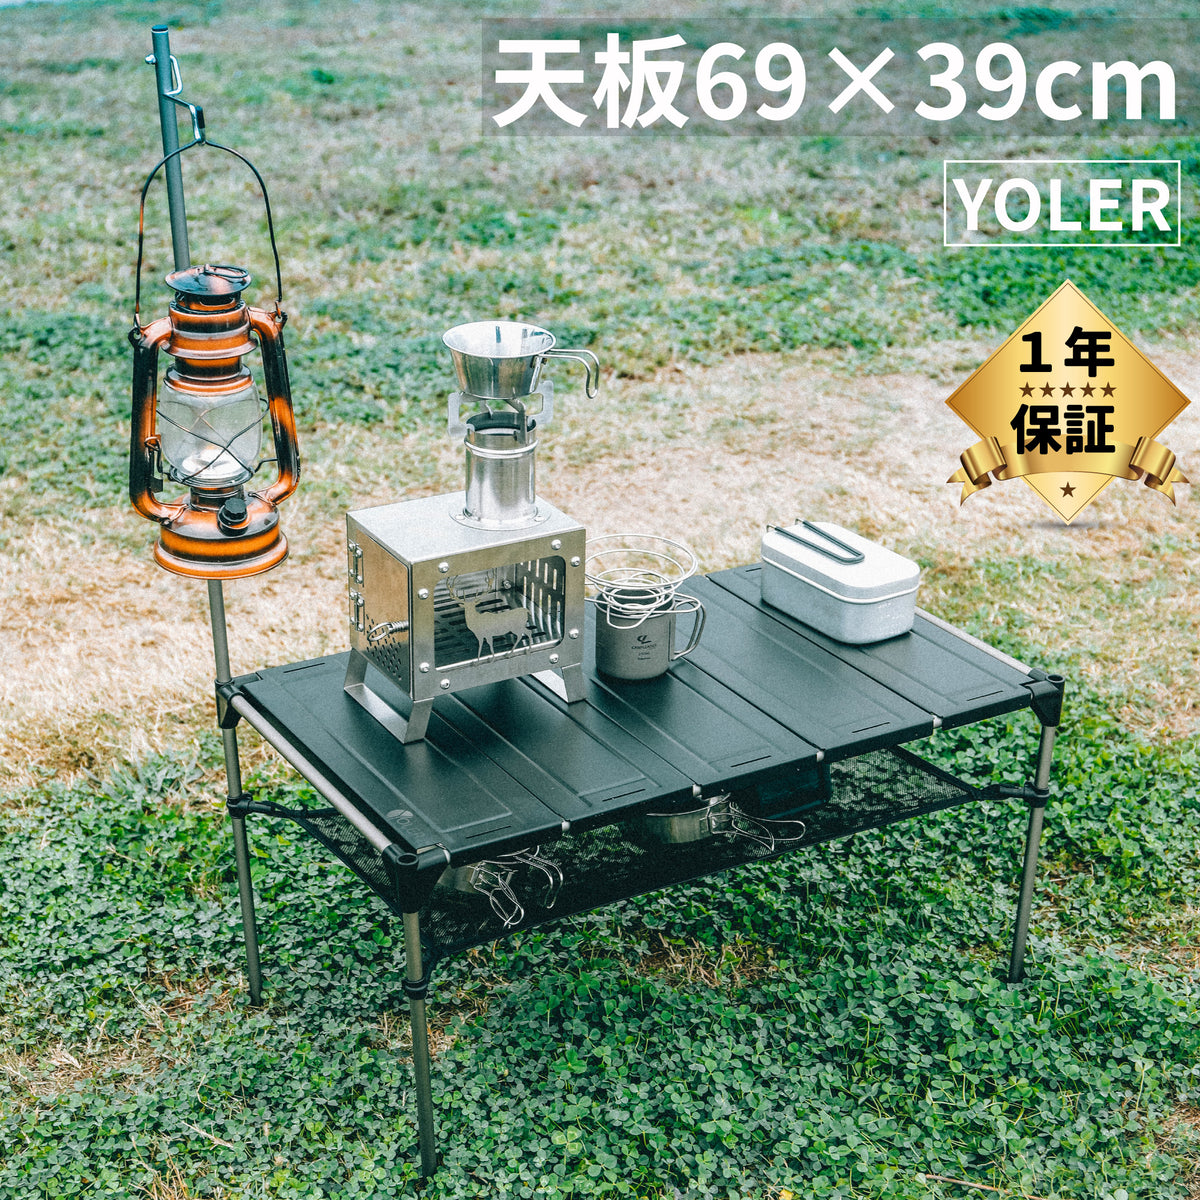 YOLER キャンプテーブルアルミ製 ランタンハンガー付き YR 